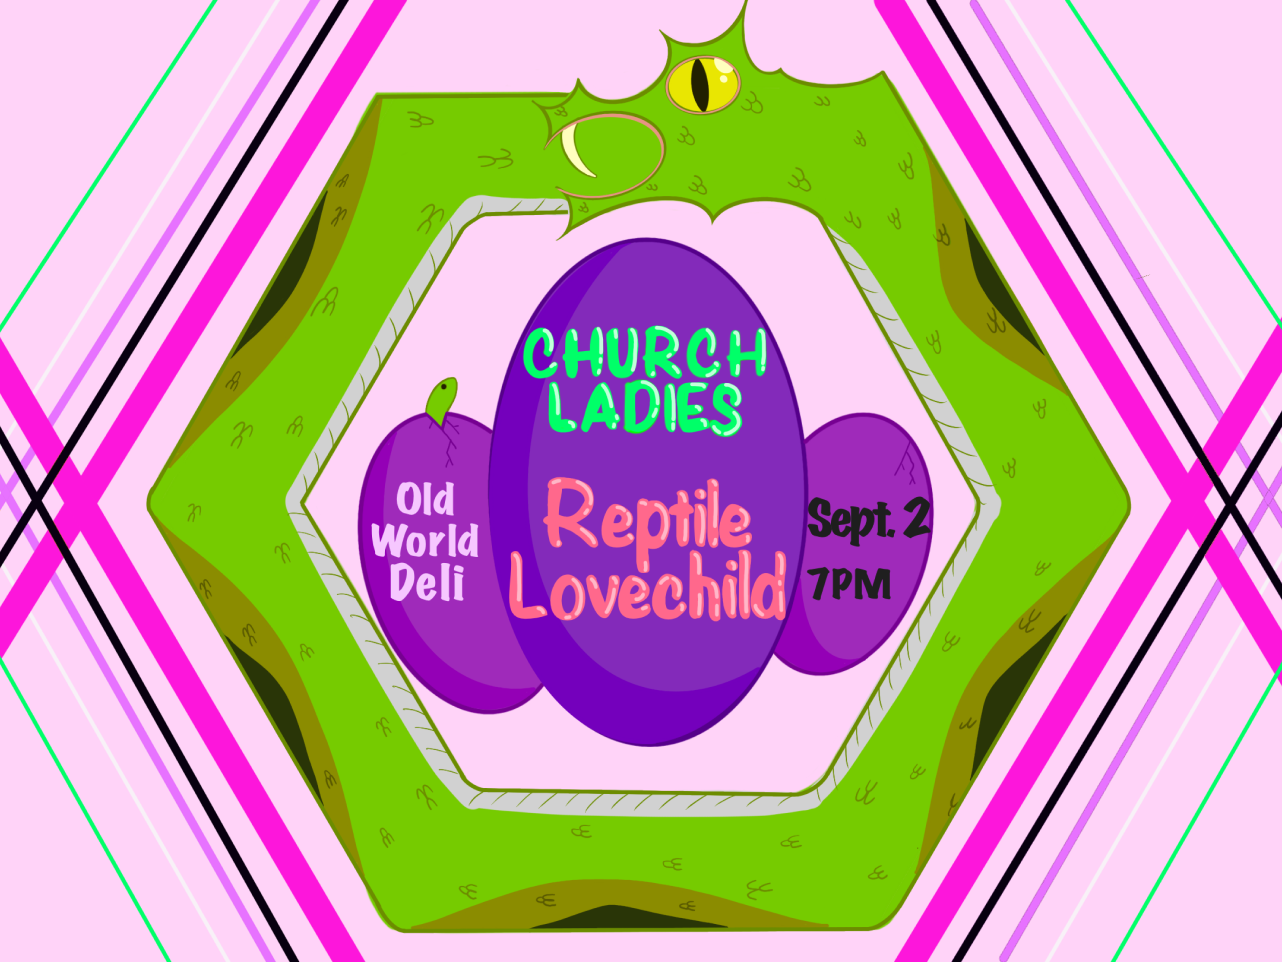 Church Ladies & Reptile Lovechild Poster